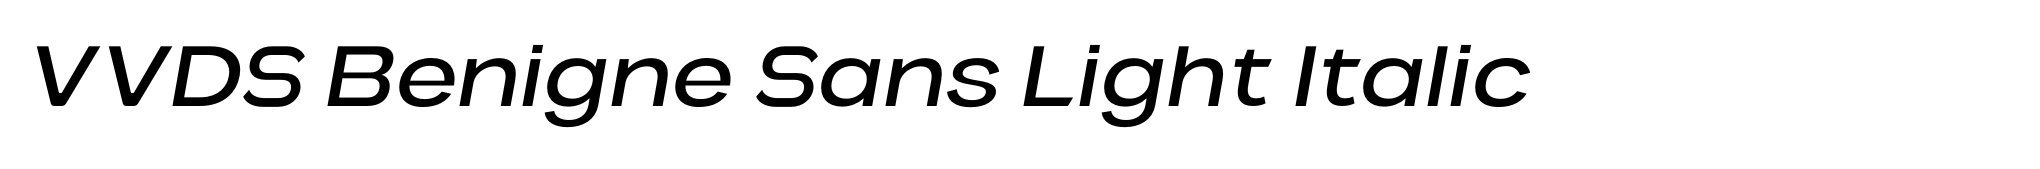 VVDS Benigne Sans Light Italic image